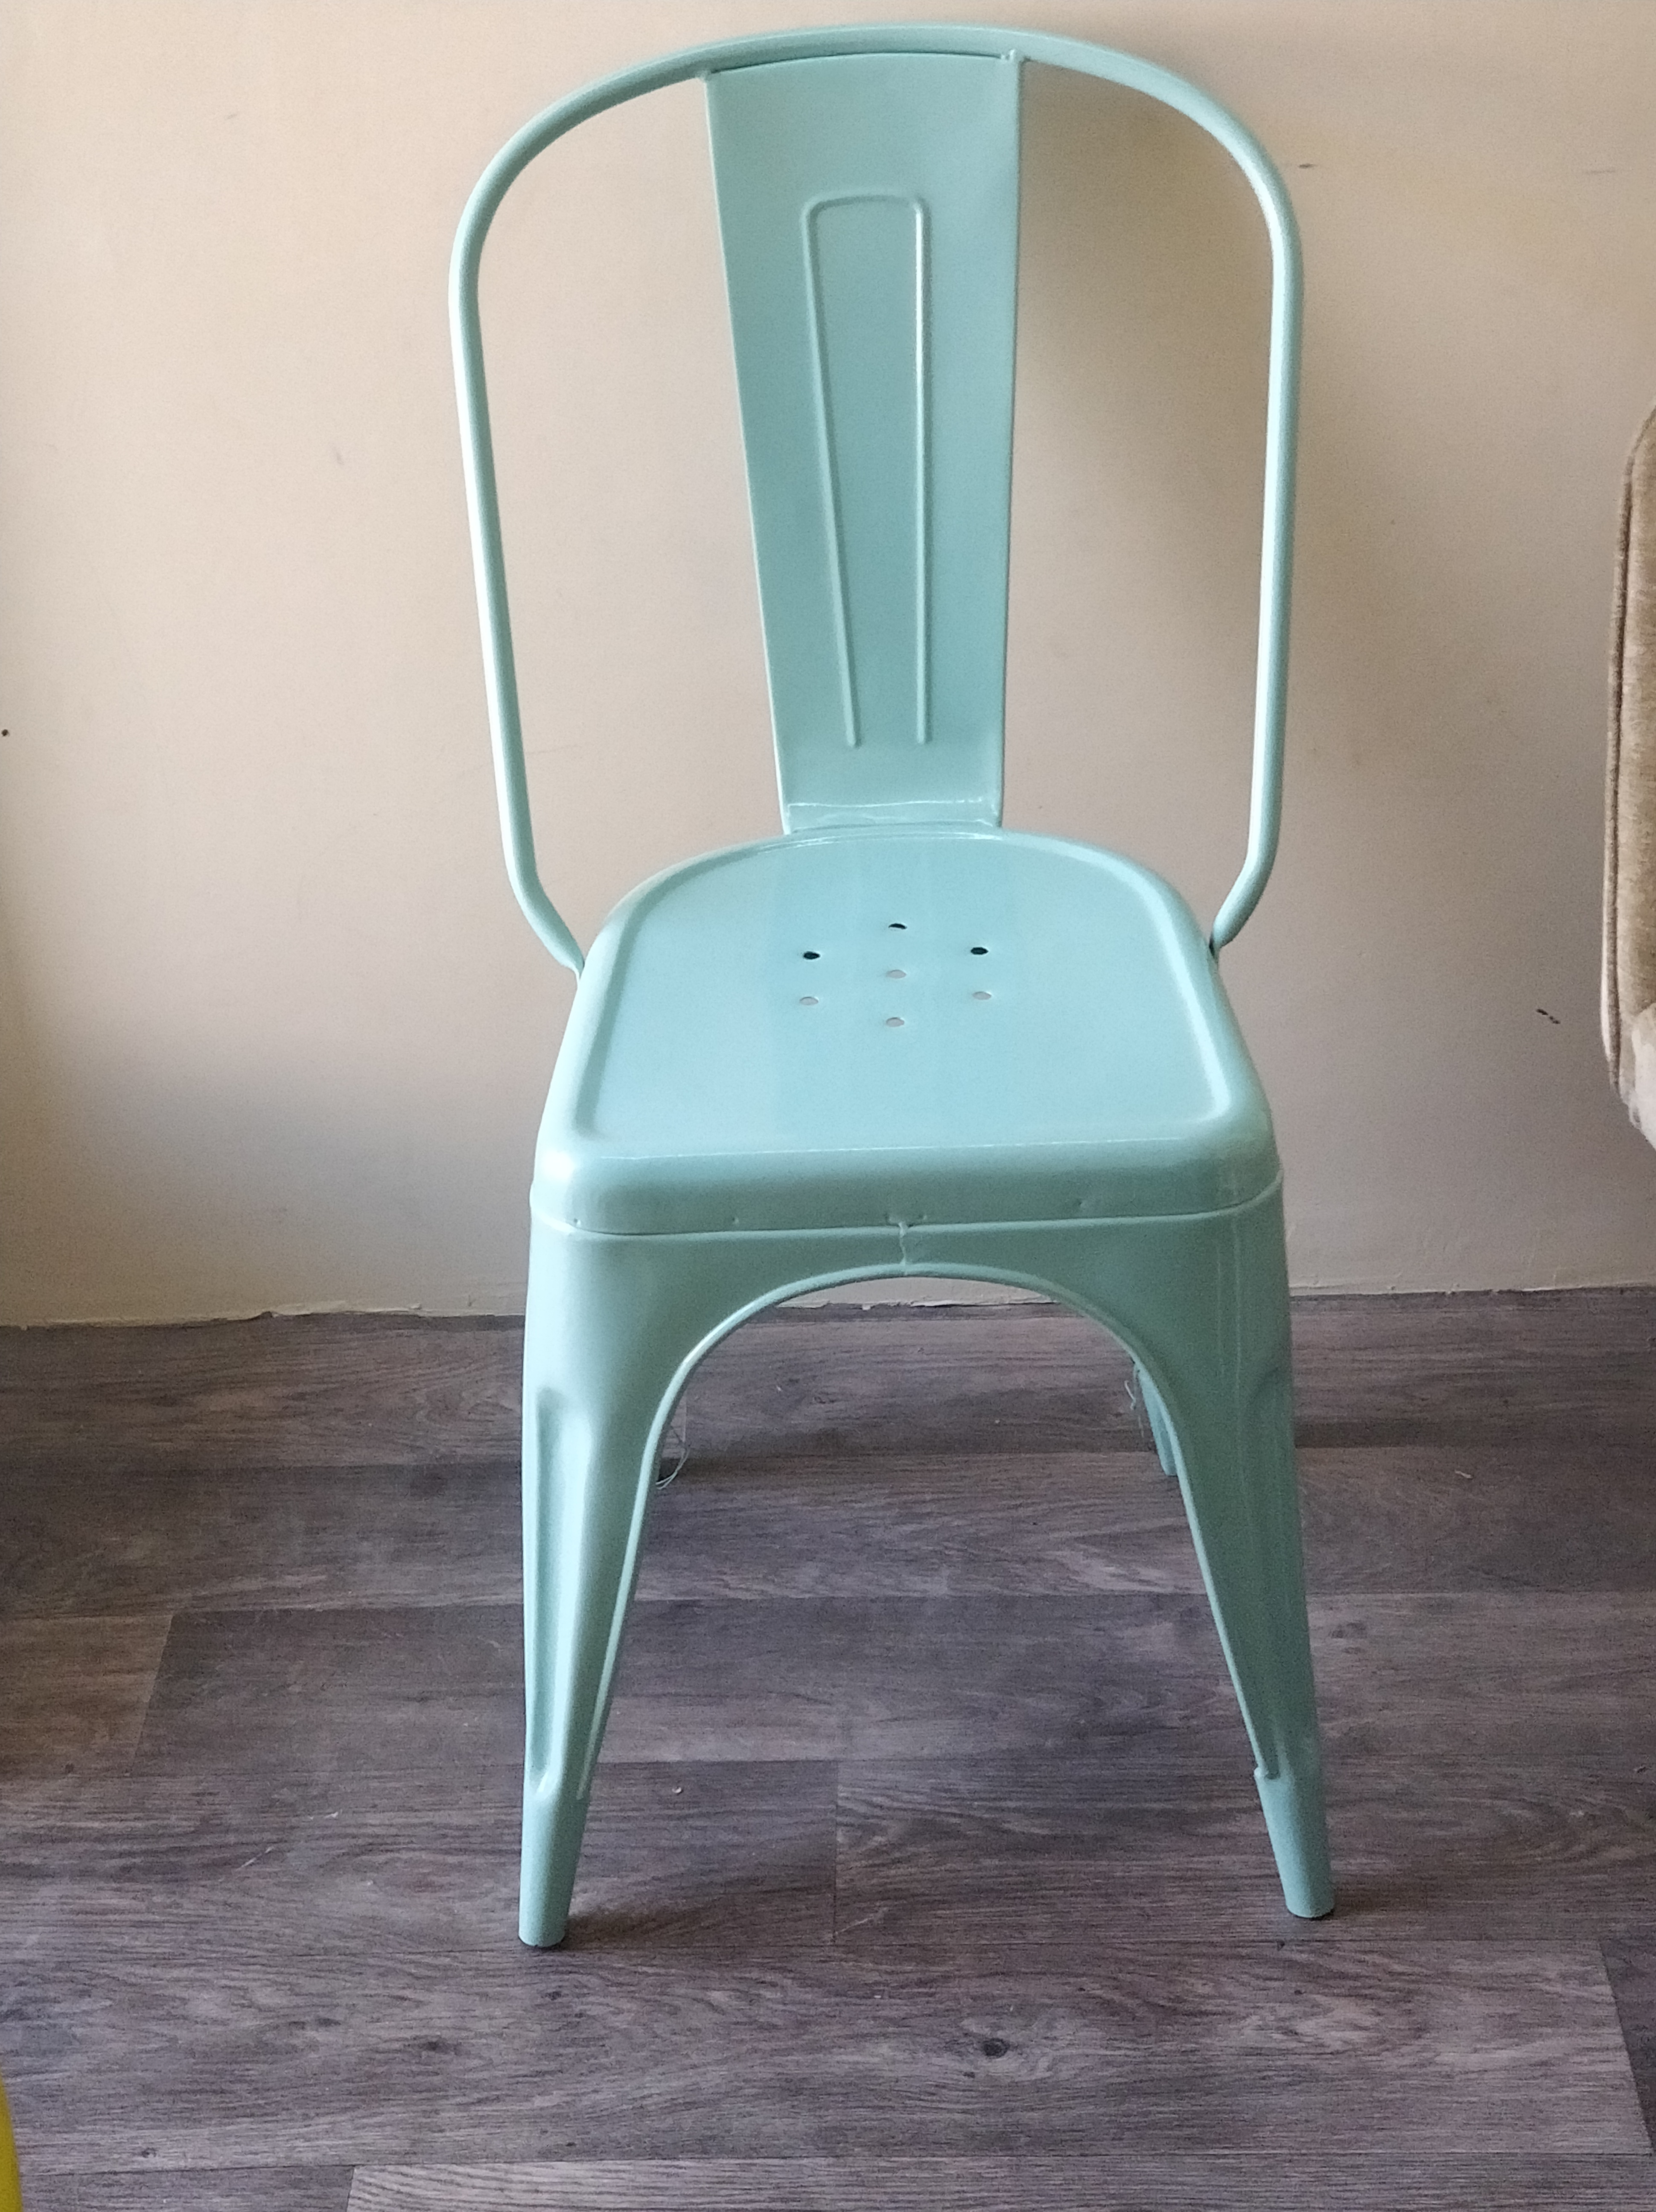 Tolix Chair